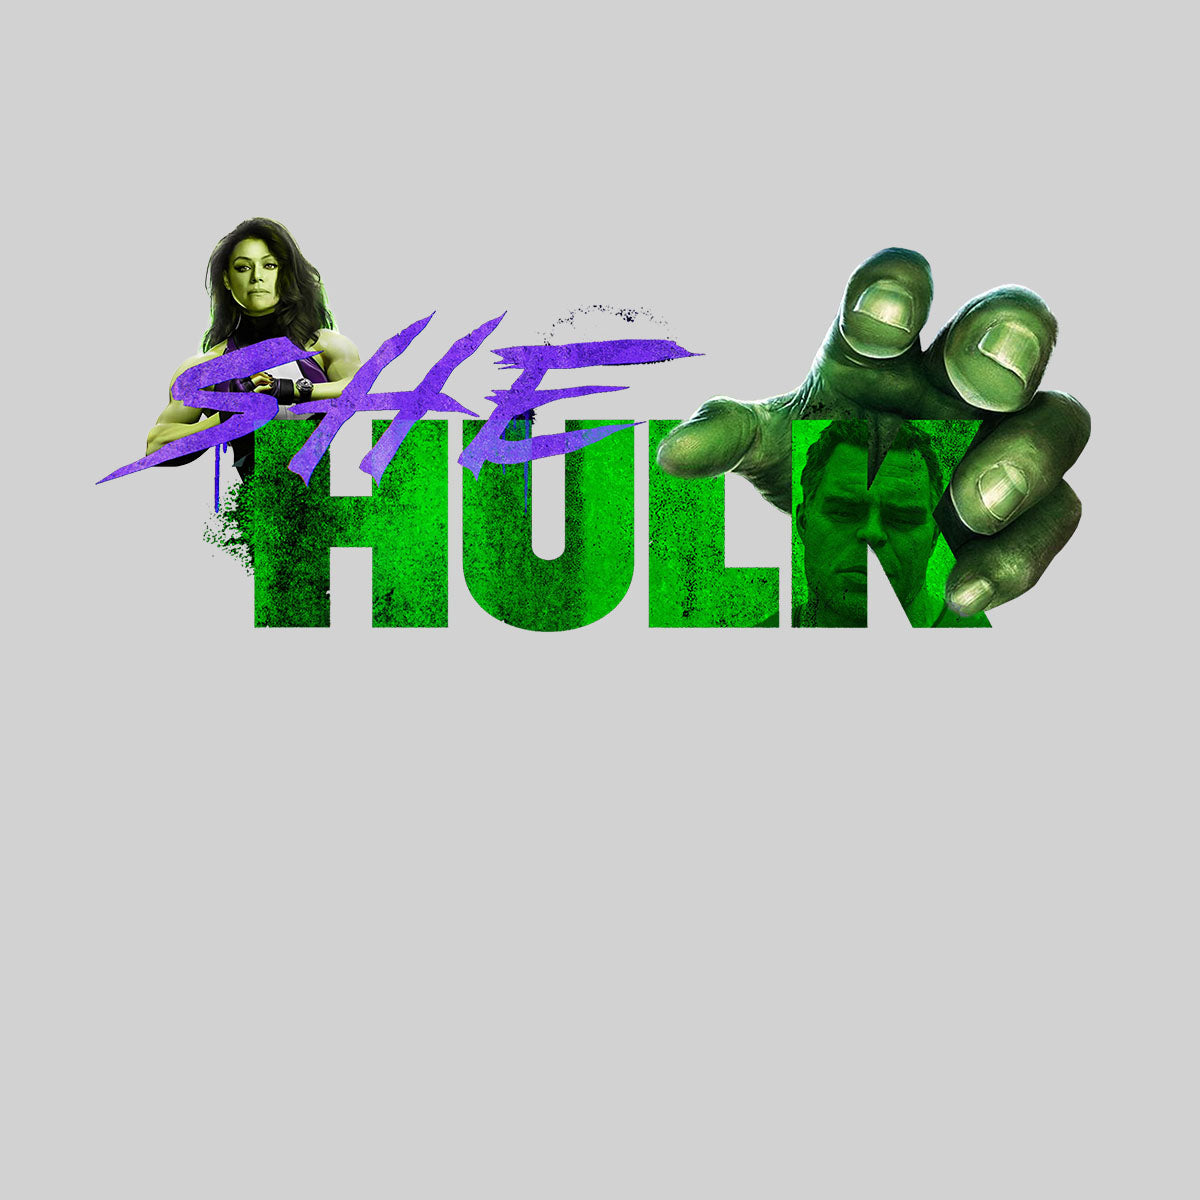 She hulk T-shirt fictional Comic Book character Tee for Kids - Kuzi Tees